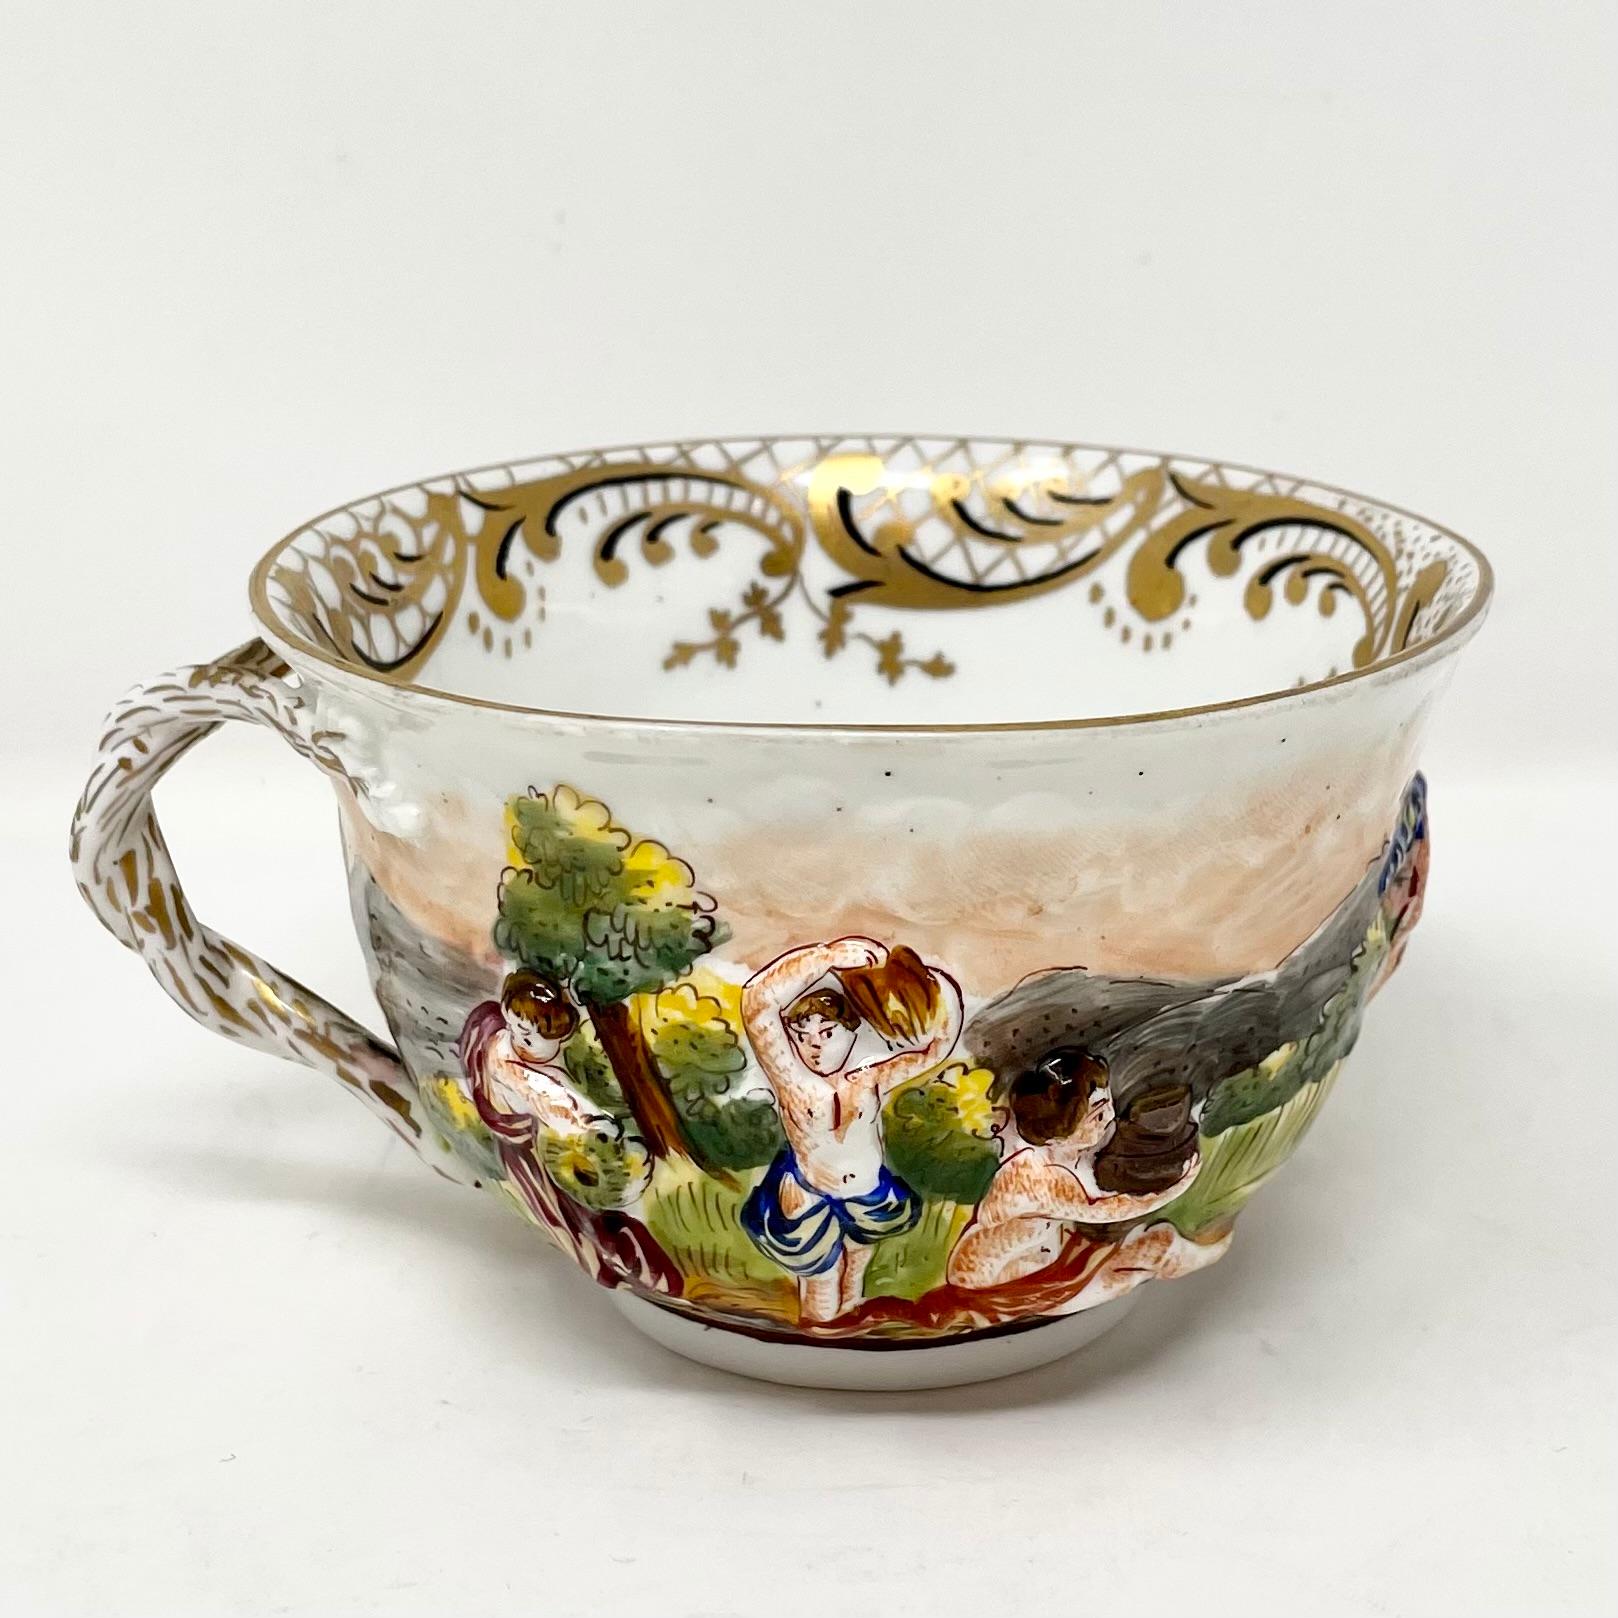 Antique Italian Capo di Monte porcelain cup and saucer, circa 1870s-1880s.
Teacup: 2 1/2